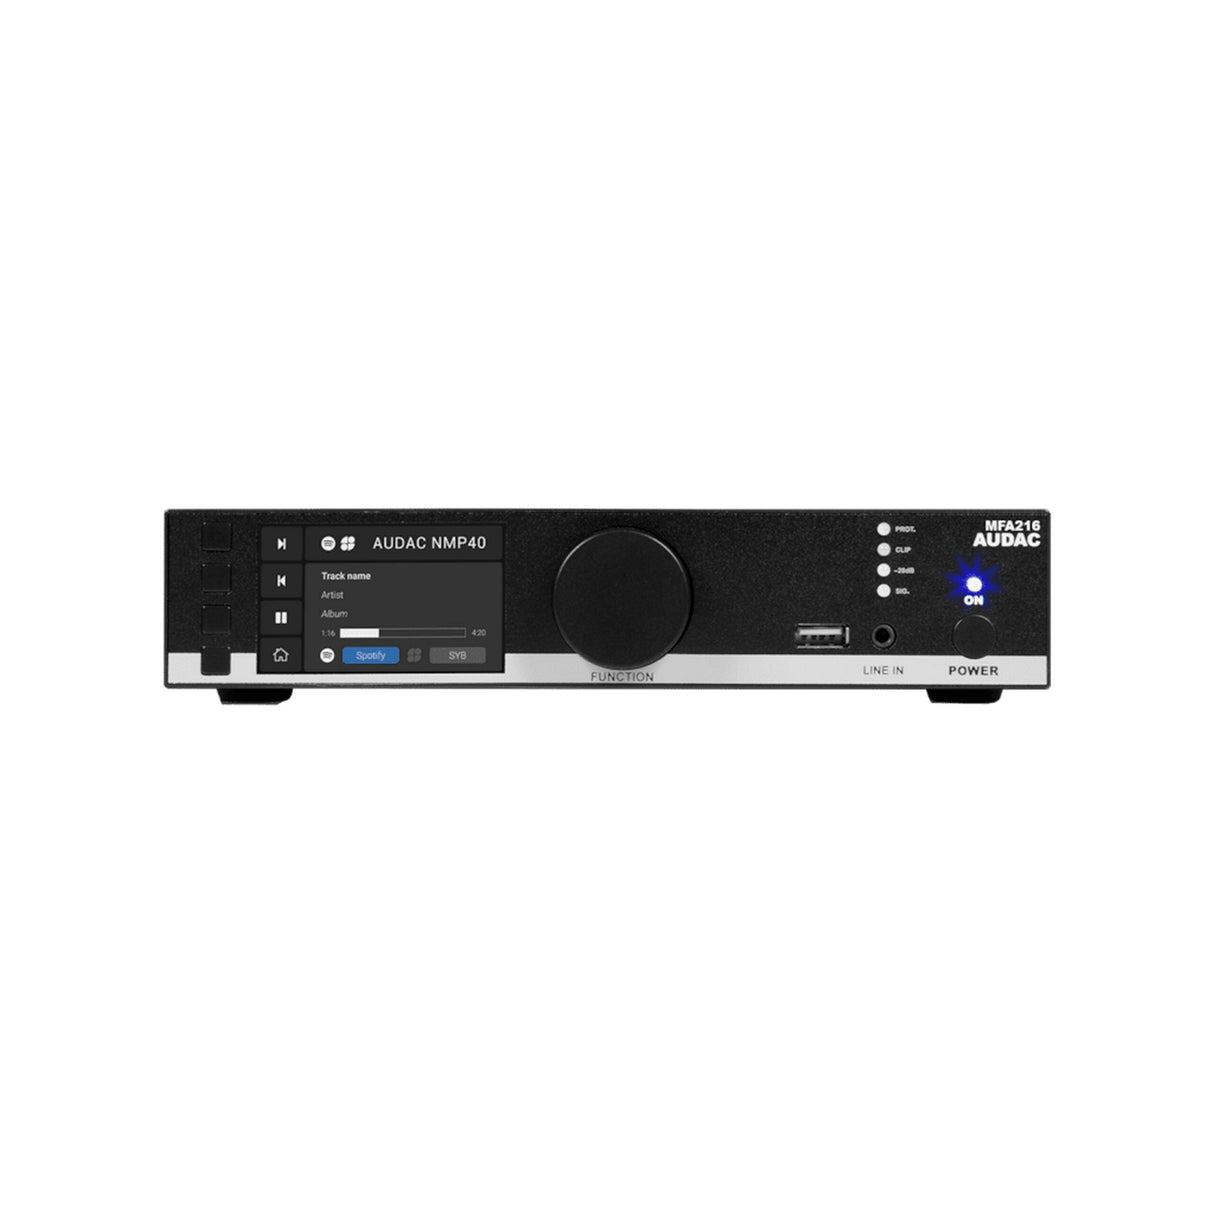 Audac MFA216 2 x 80W All-In-One Audio Solution